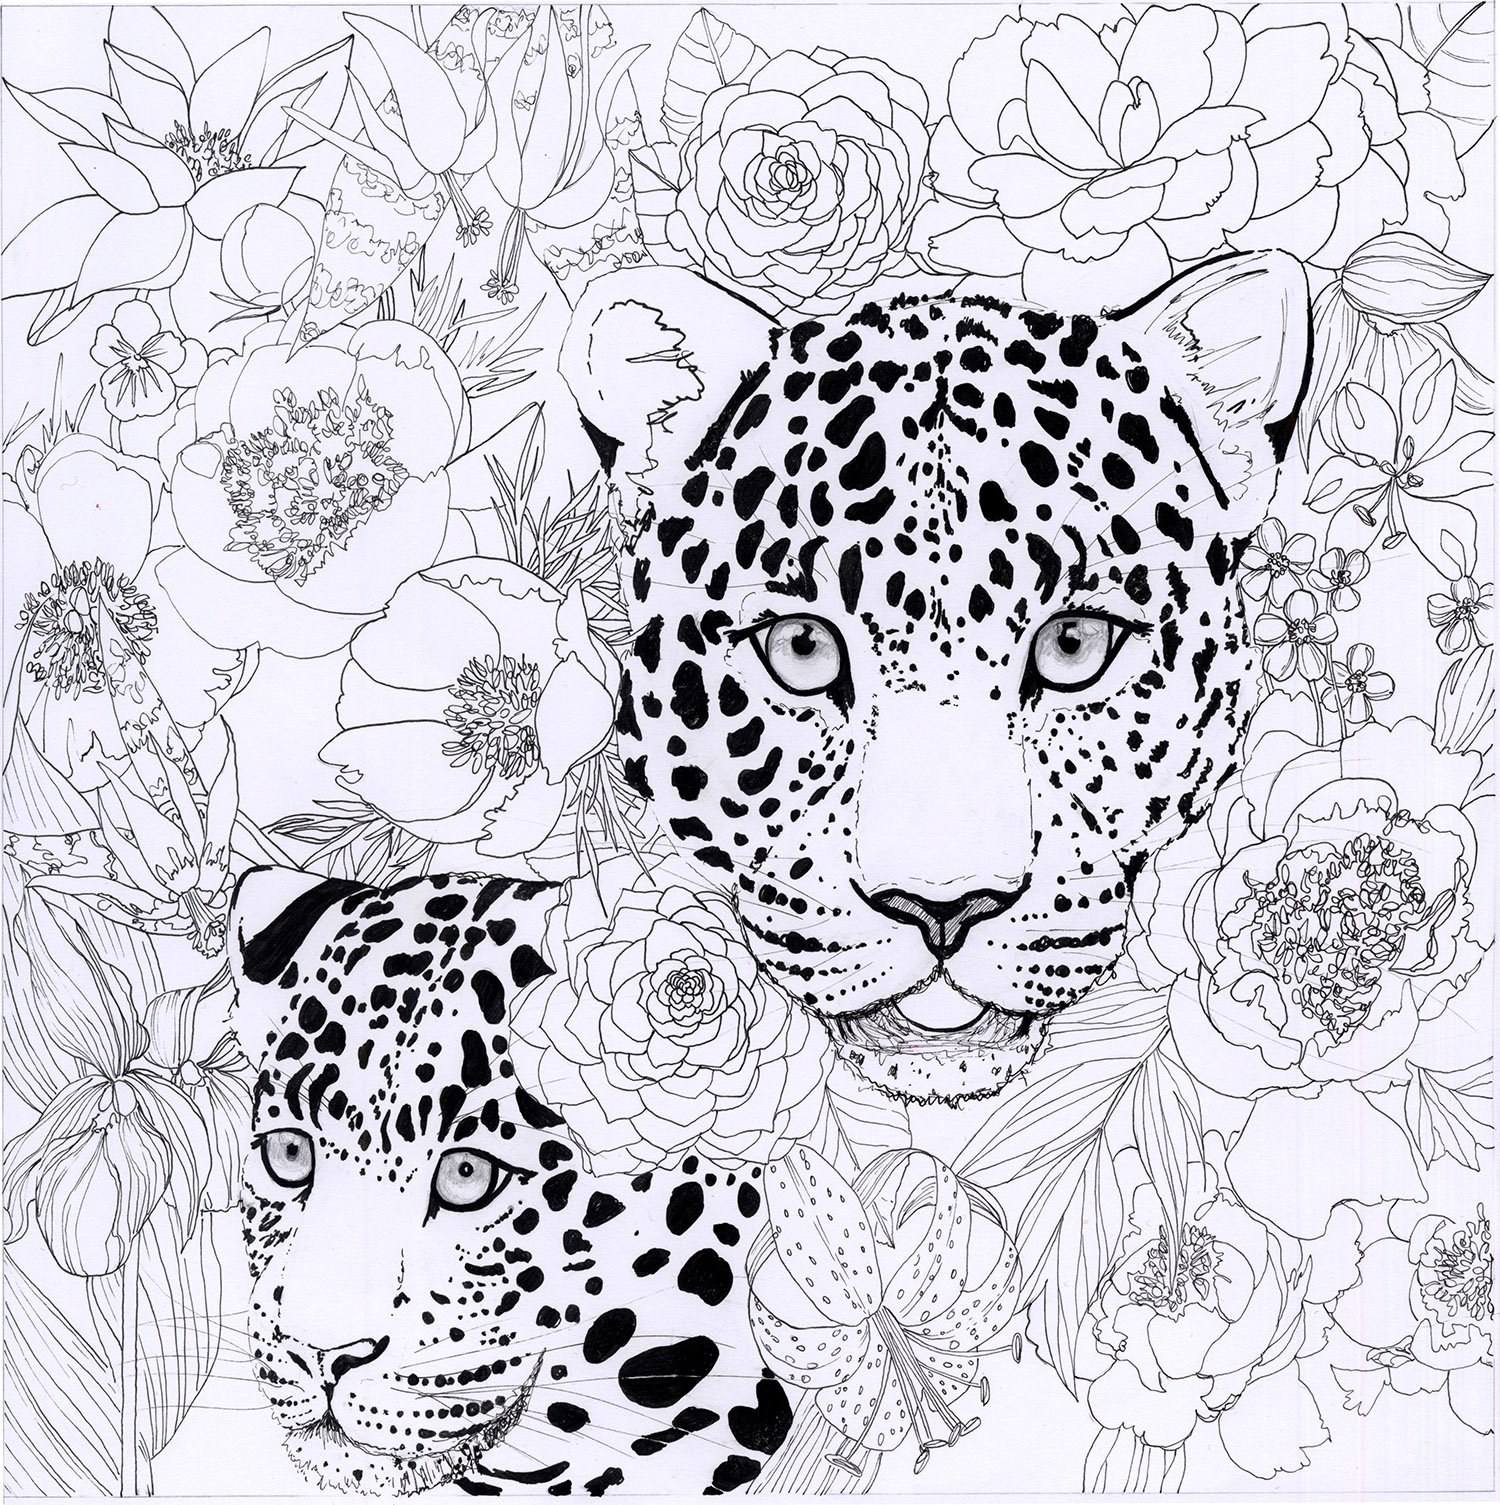 Amur Leopard Ink Illustration Hand Drawn by Marcella Wylie